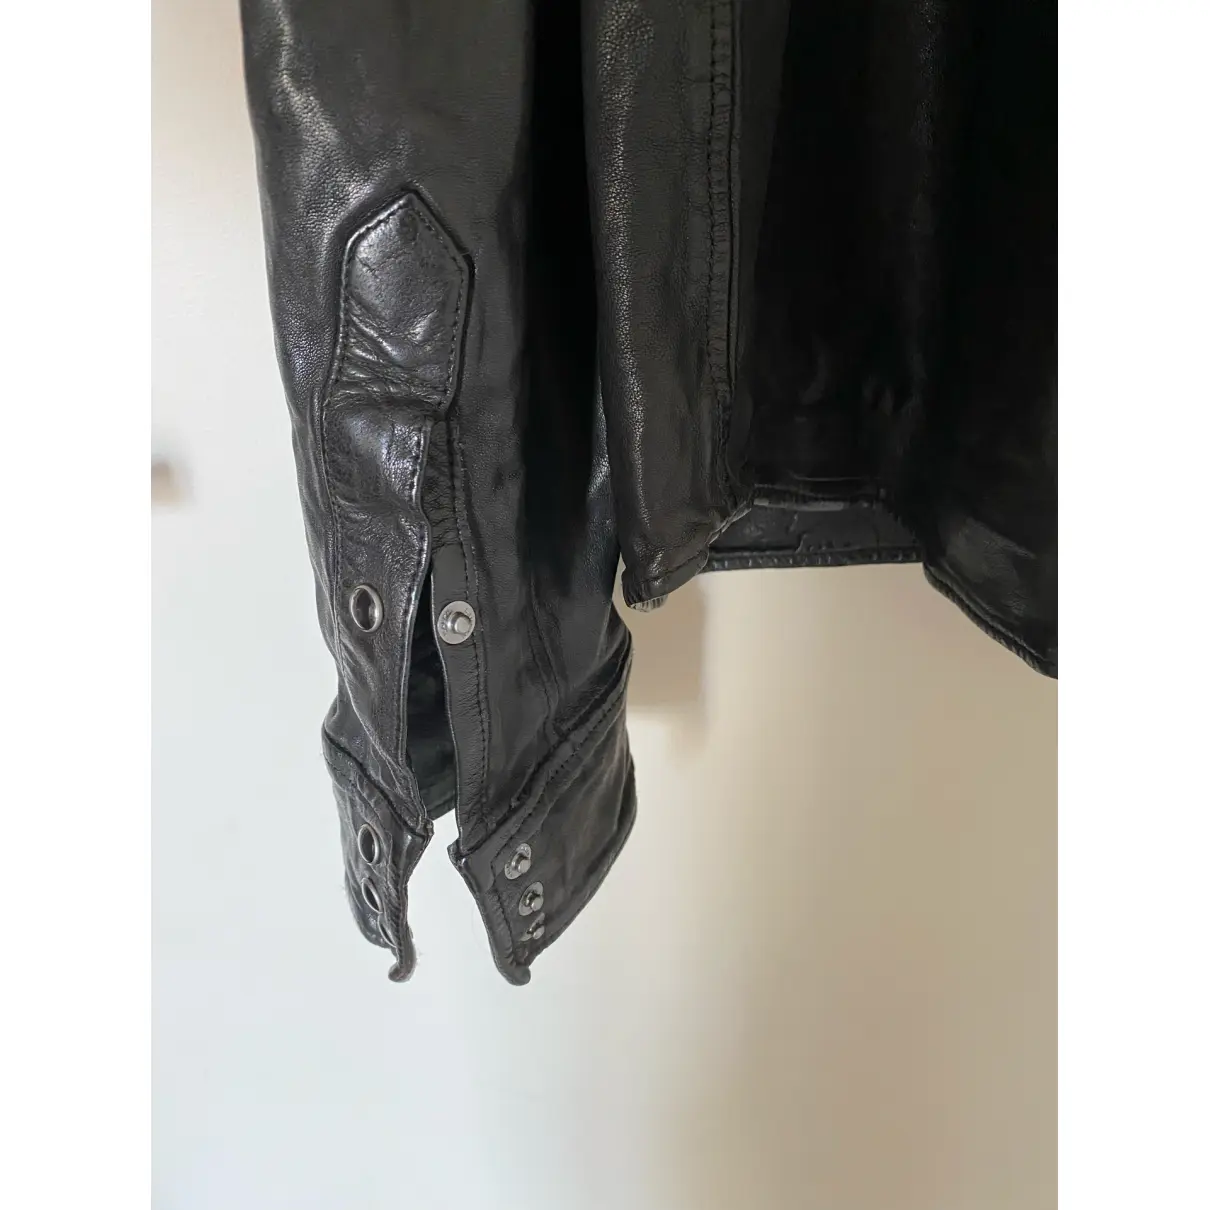 Leather jacket Polo Ralph Lauren